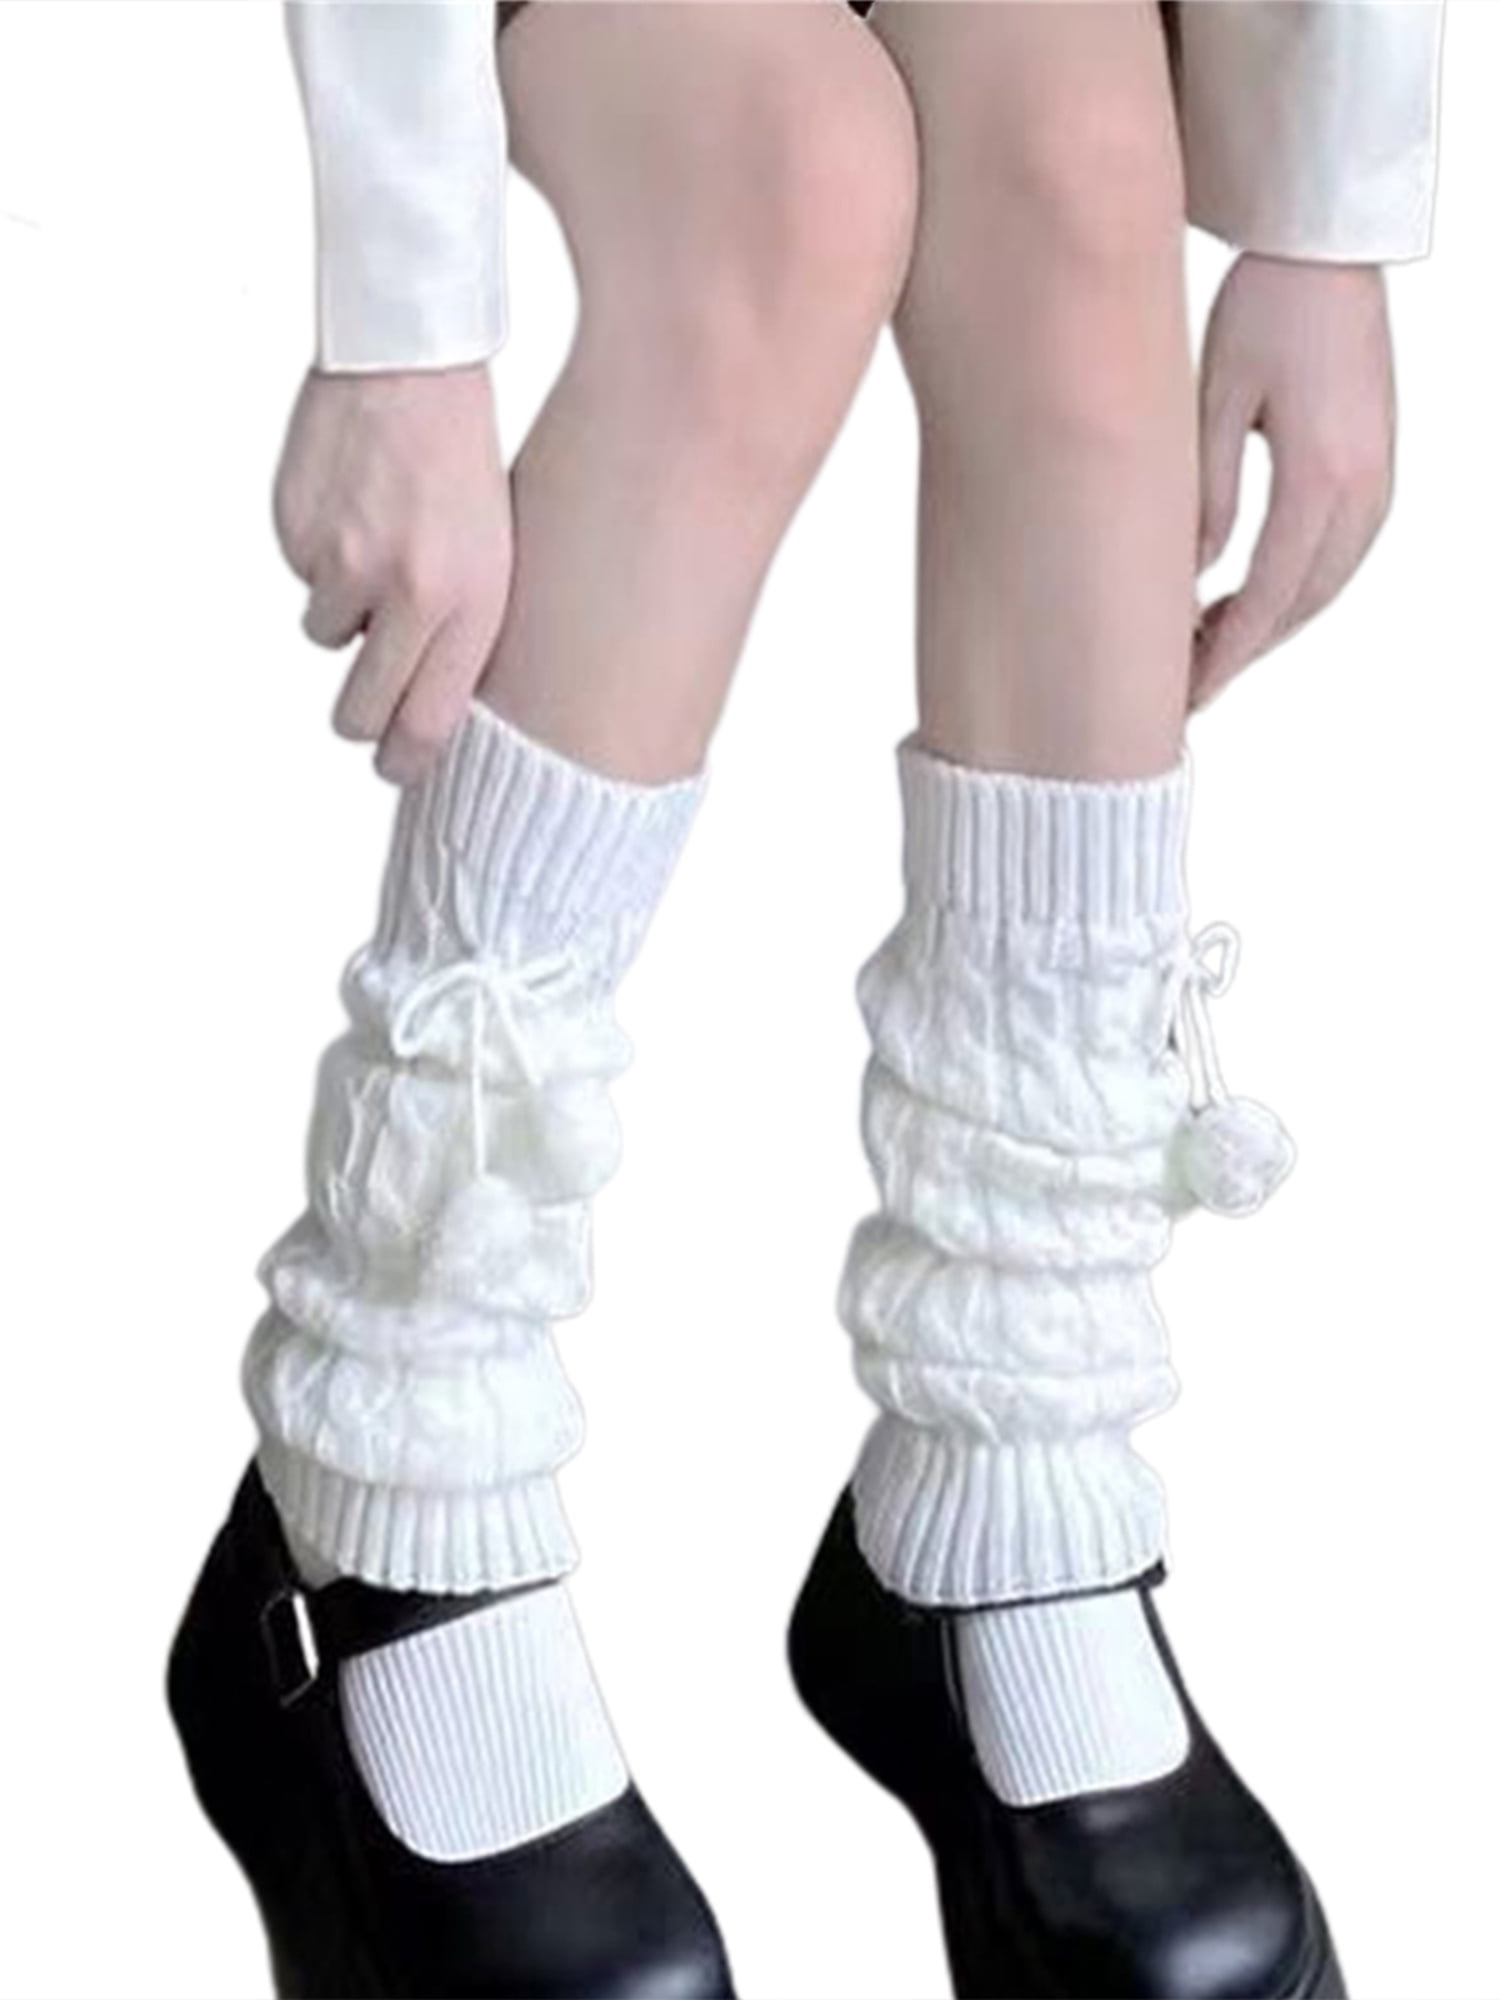 Leg Warmers for Women 80s 90s Harajuku Kawaii High Heels Boots Warm Fuzzy  Leg Cover Partywear Clubwear 